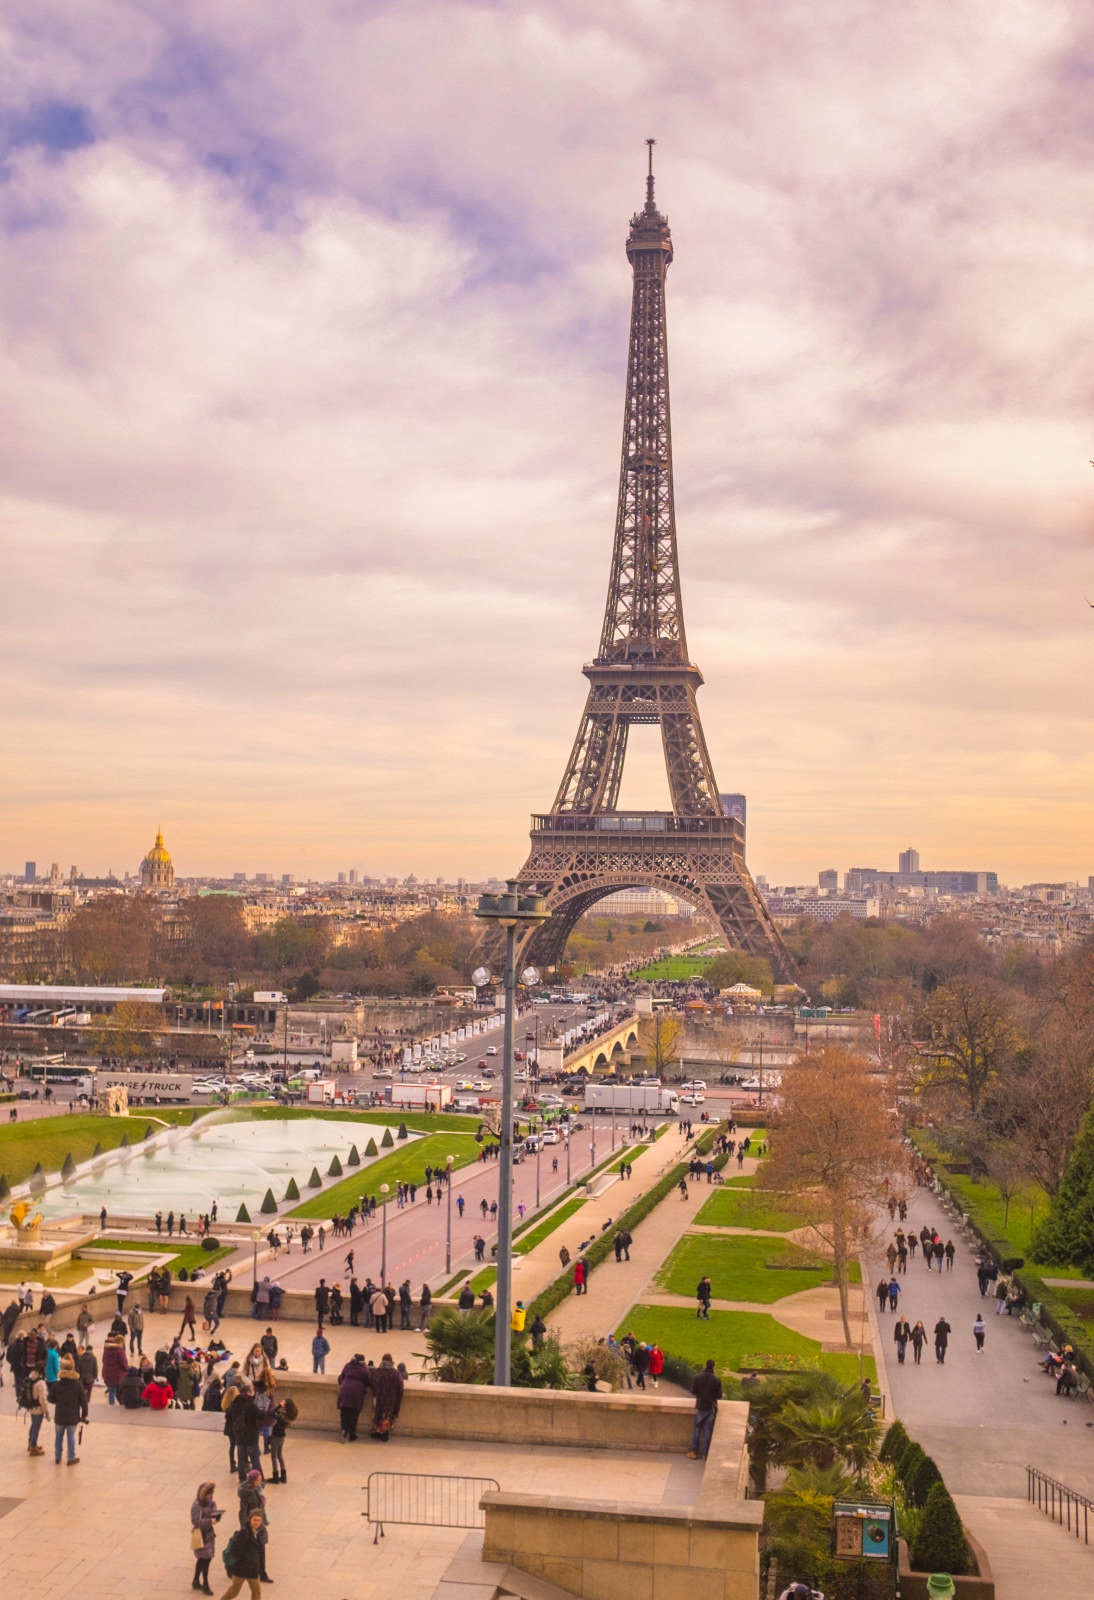 5 – The Eiffel Tower, Paris, France